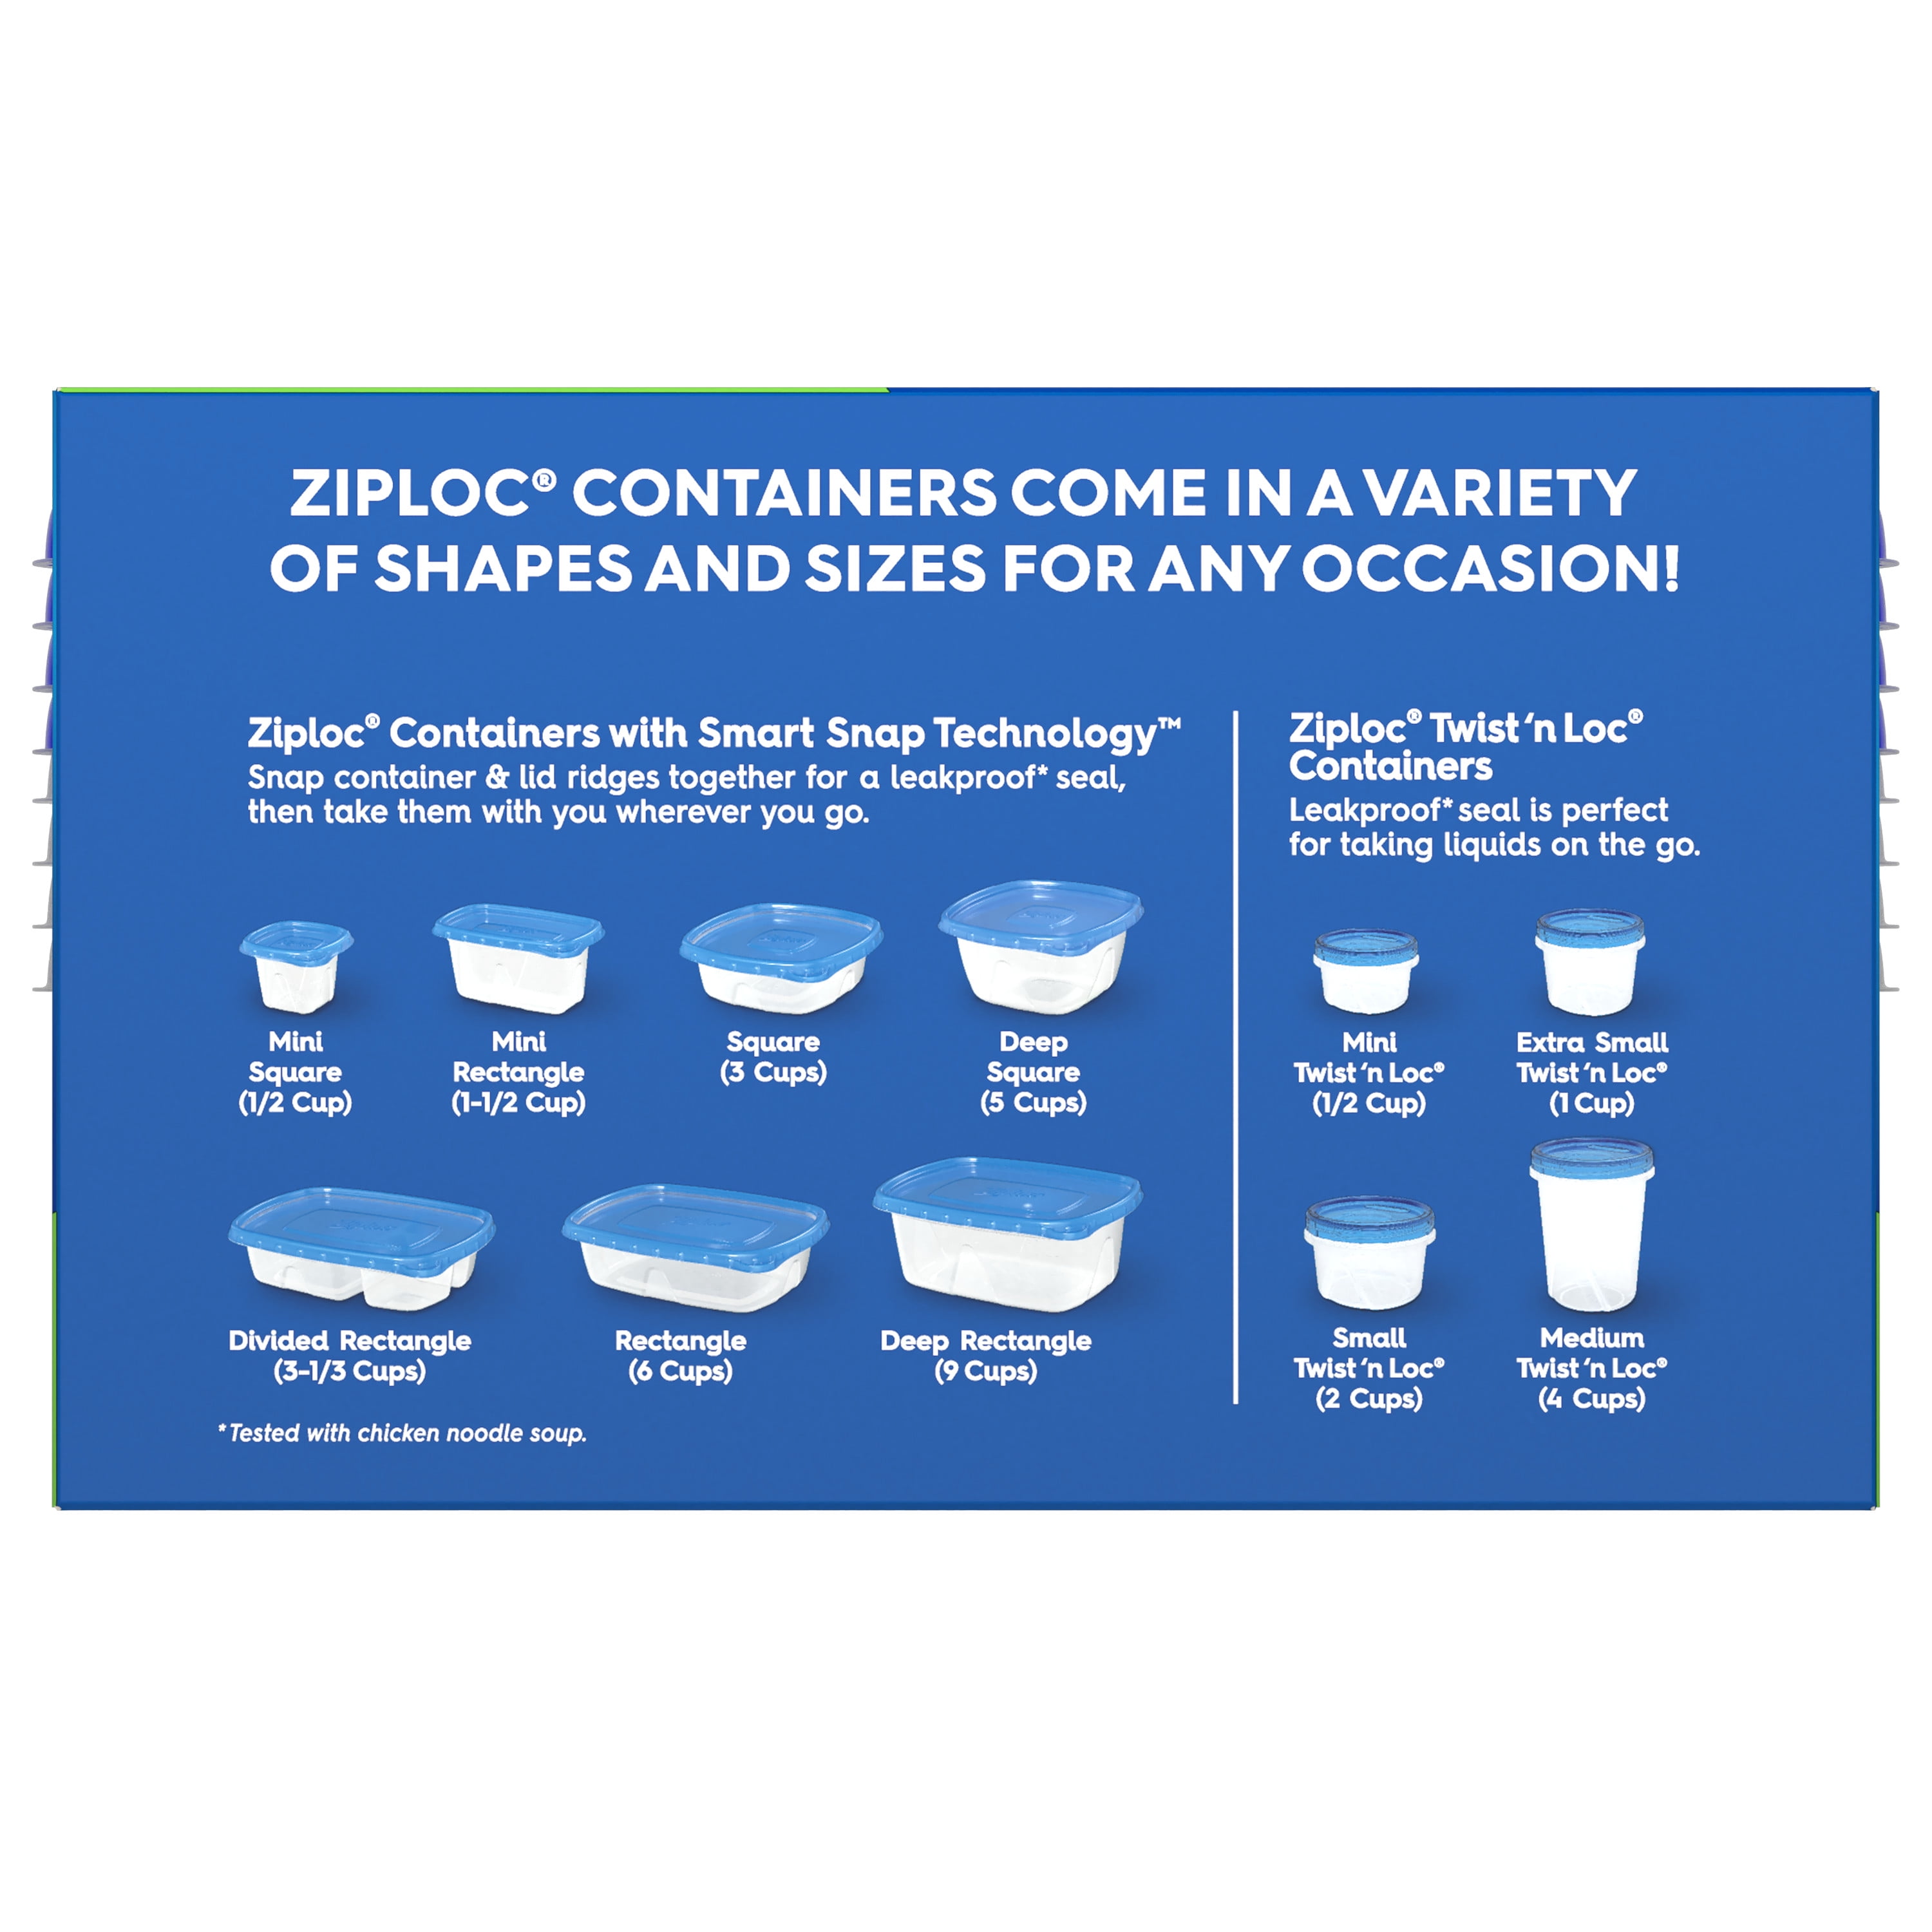 Ziploc®, Square Containers, Ziploc® brand